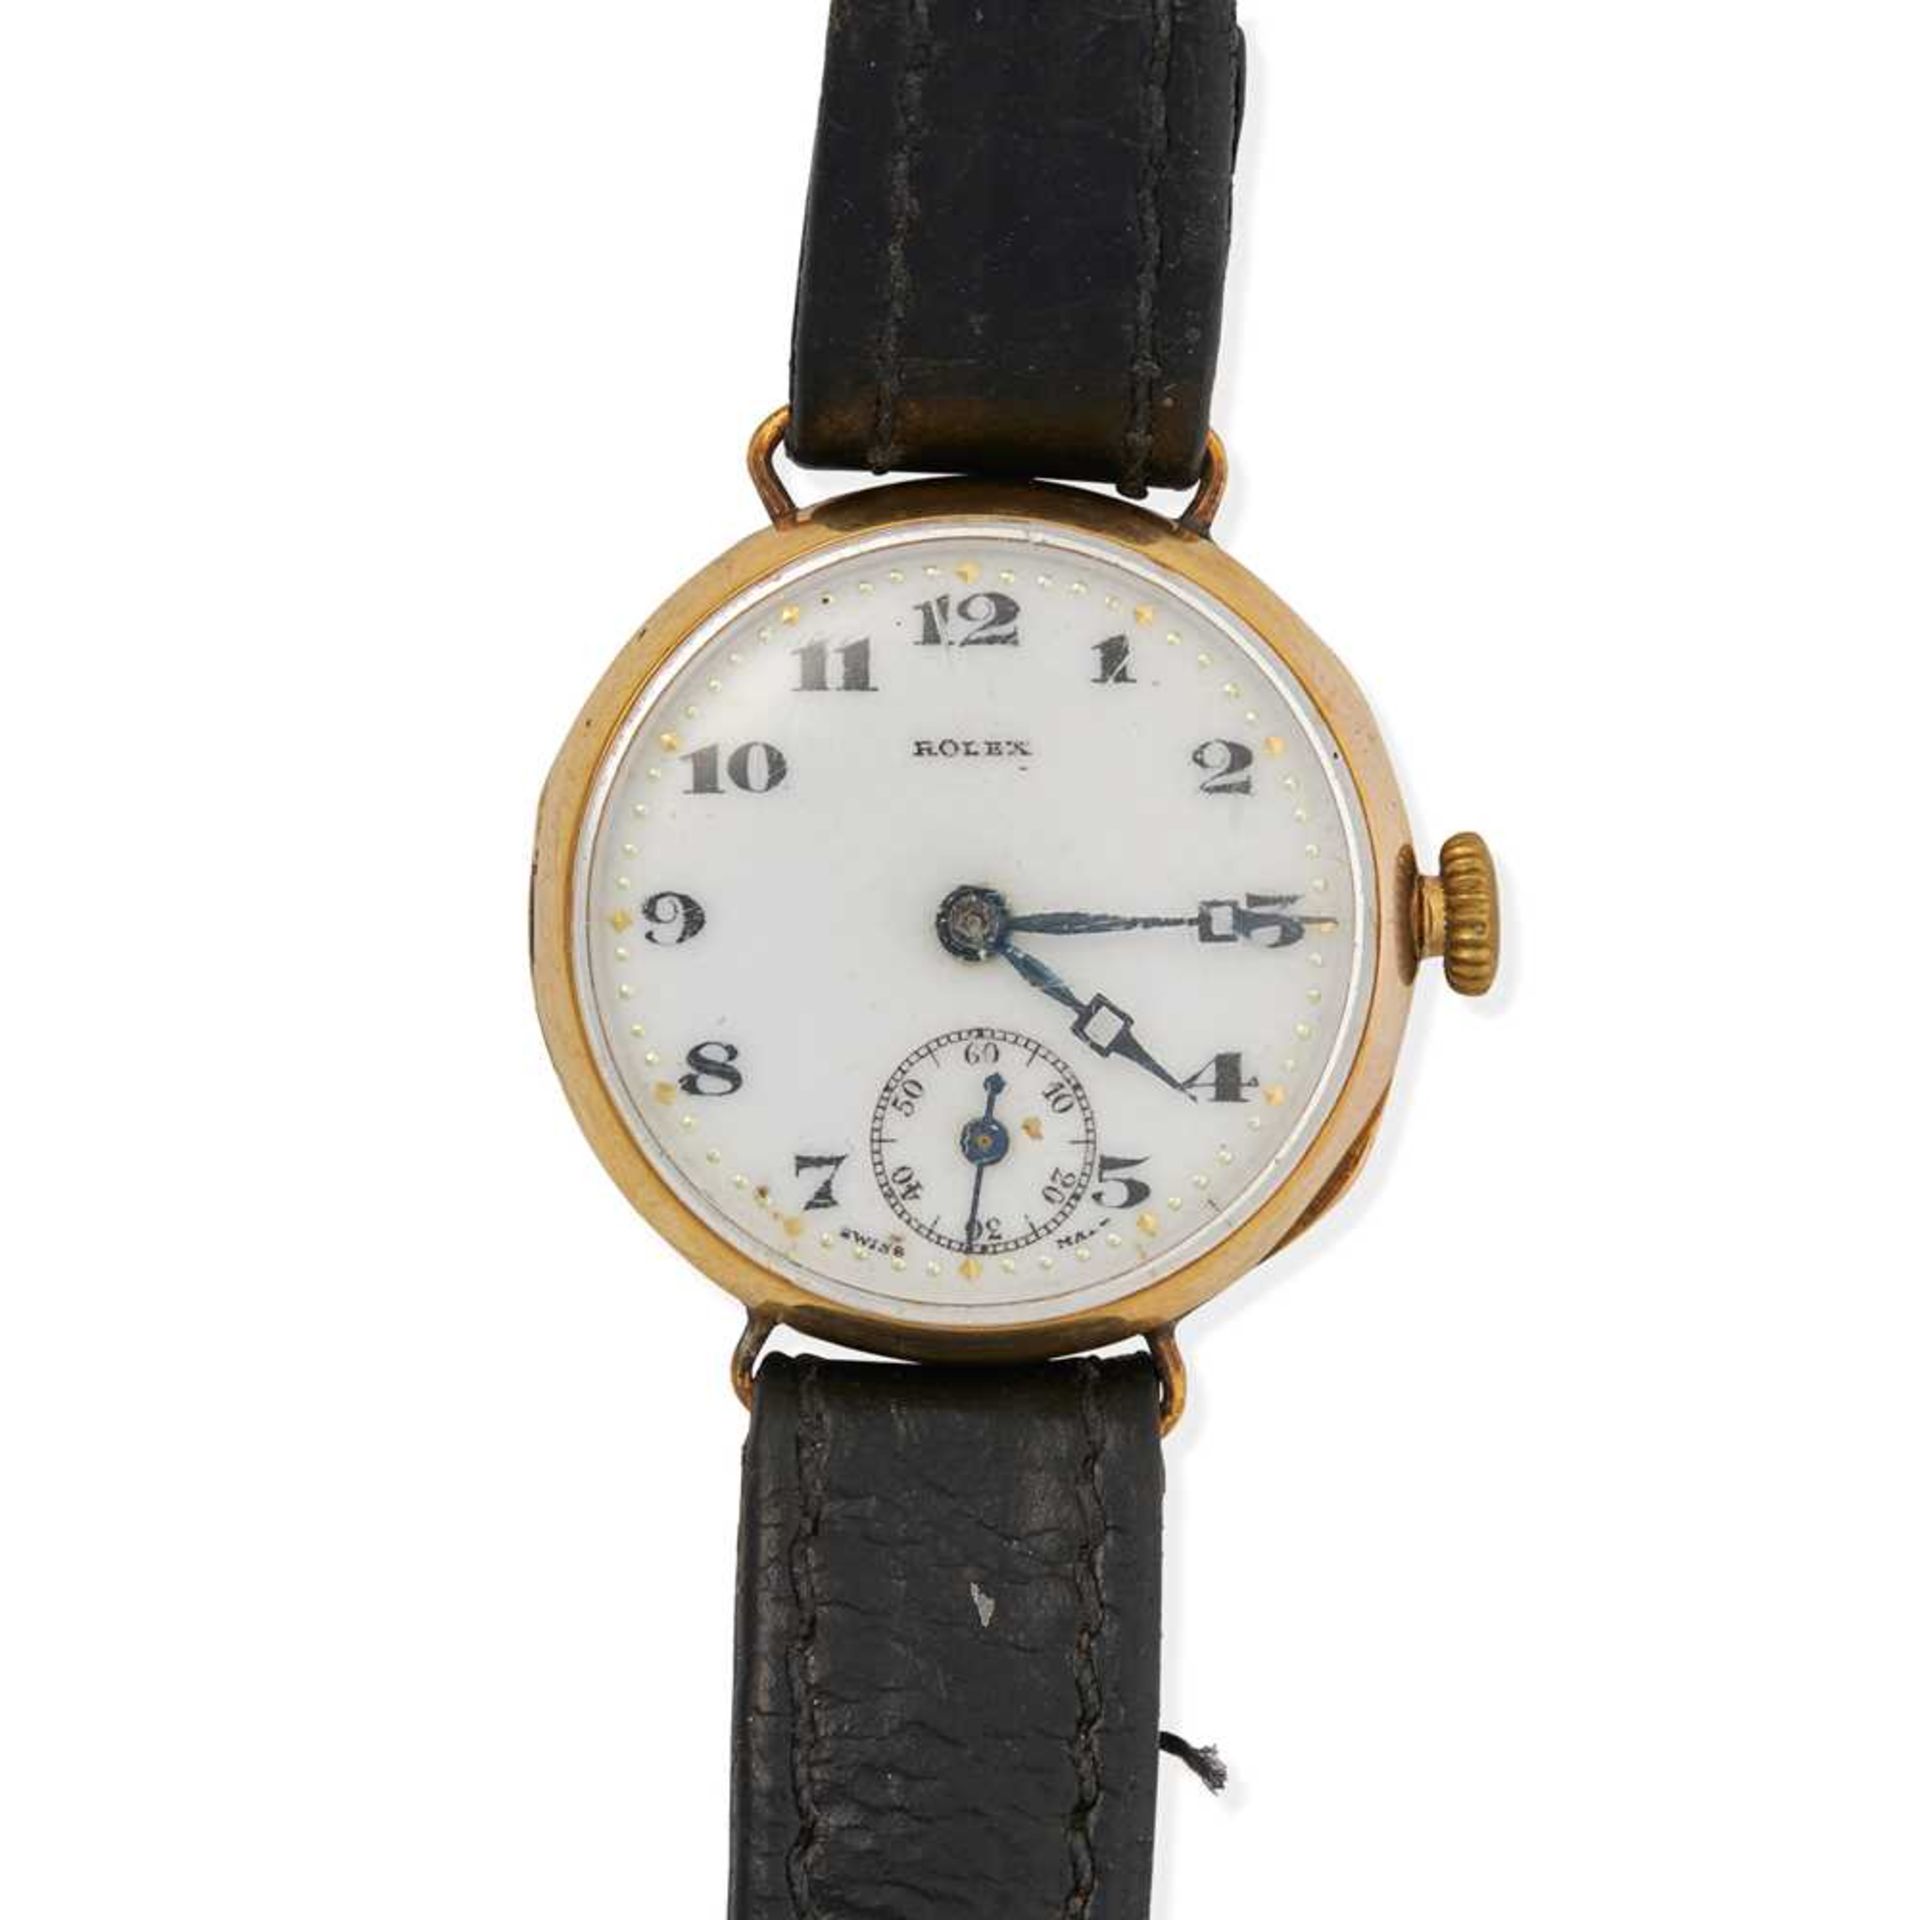 Rolex: a lady's early 20th century wrist watch